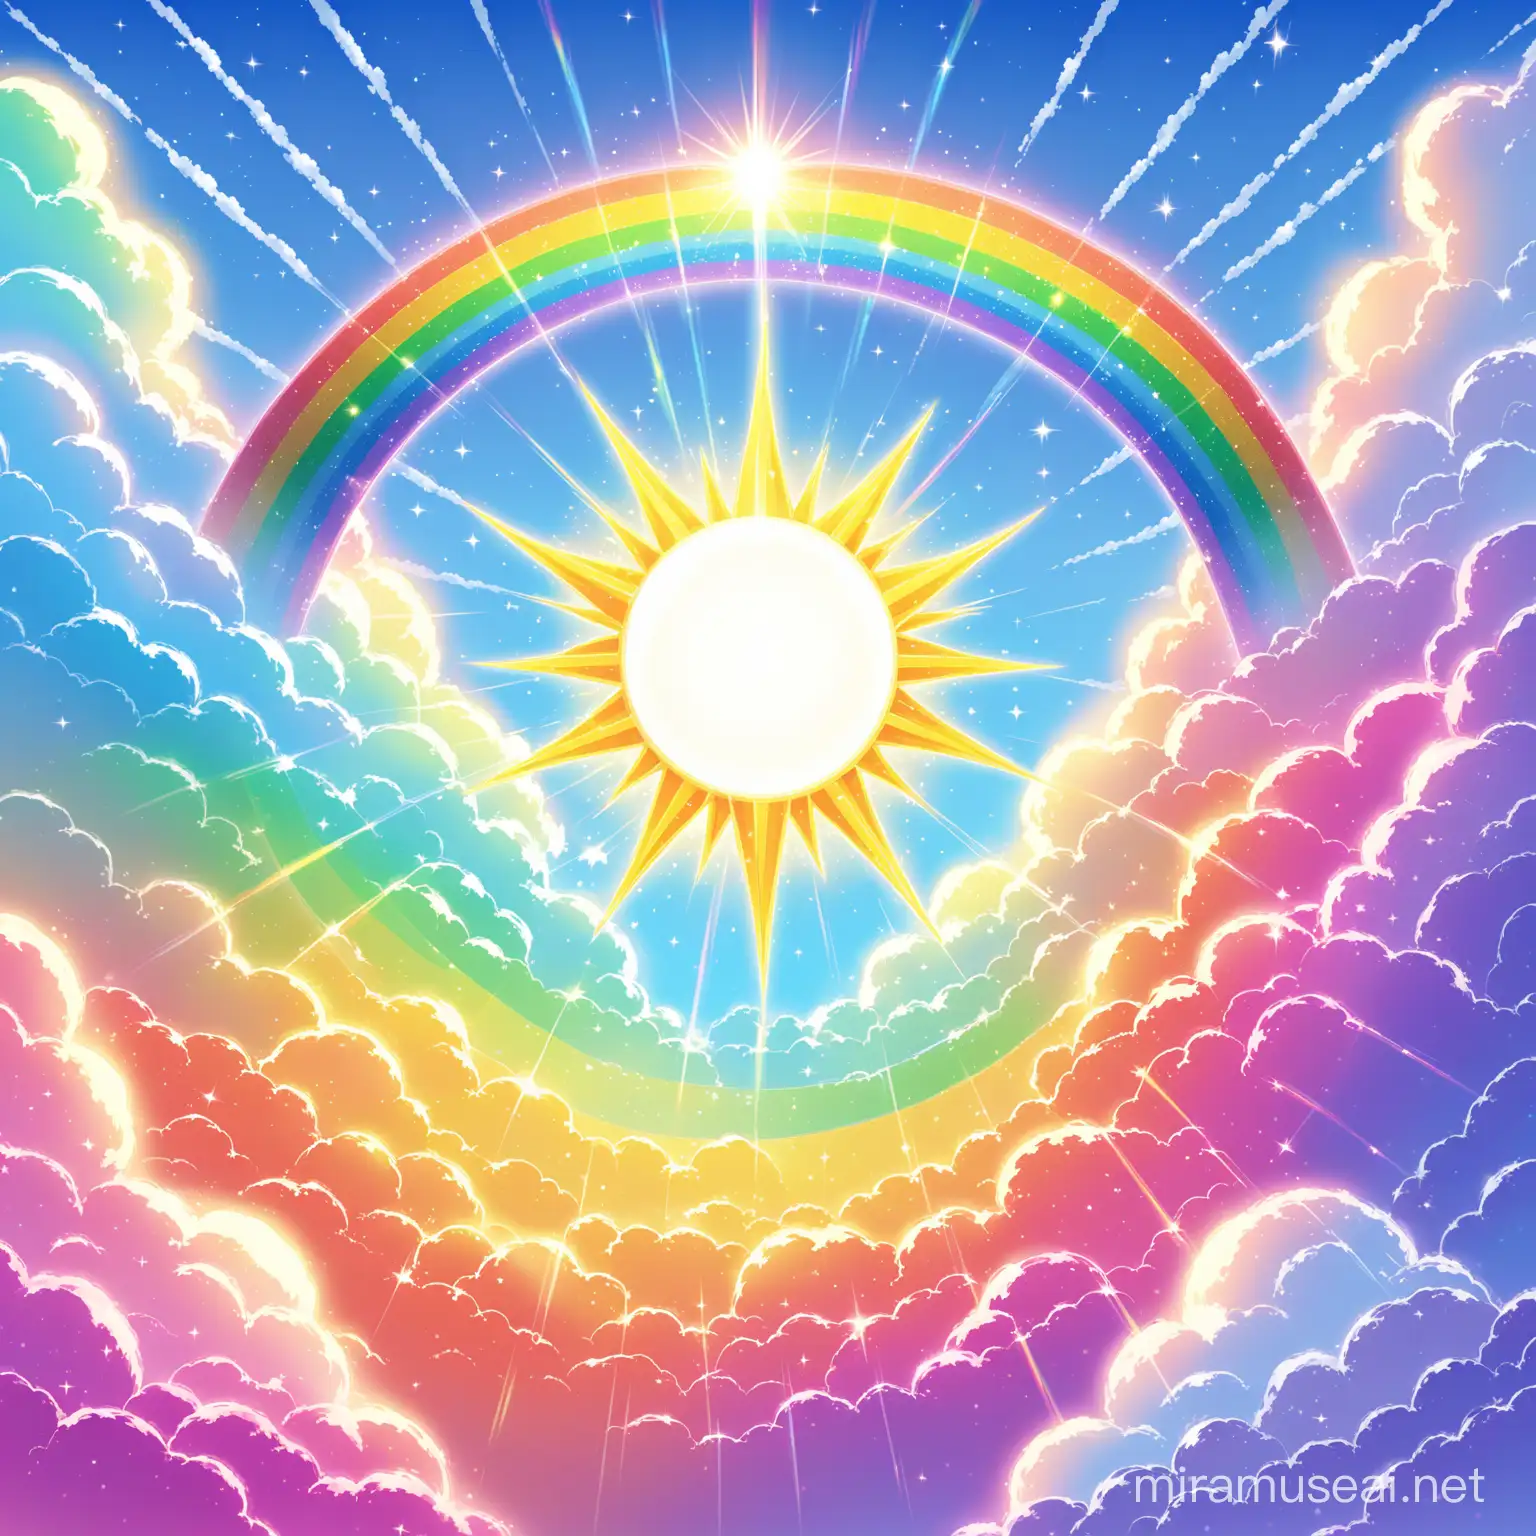 Vibrant Rainbow Overlapping the Radiant Sun in Clear Sky